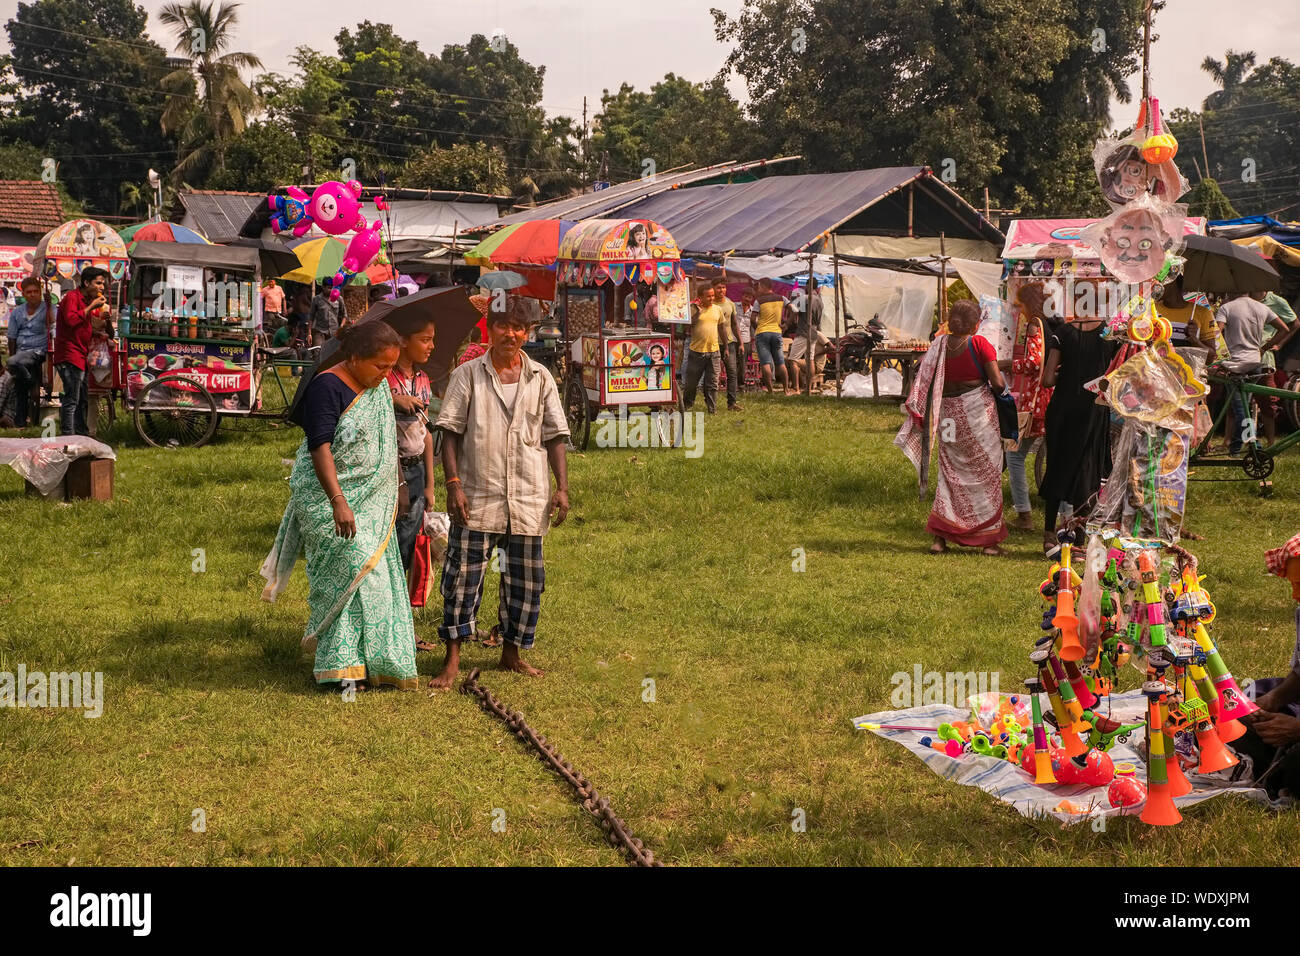 Village,Baruipur,Rathayatra.Mela,ground,people,congegrating,Soth 24 Parganas, West Bengal,India. Stock Photo